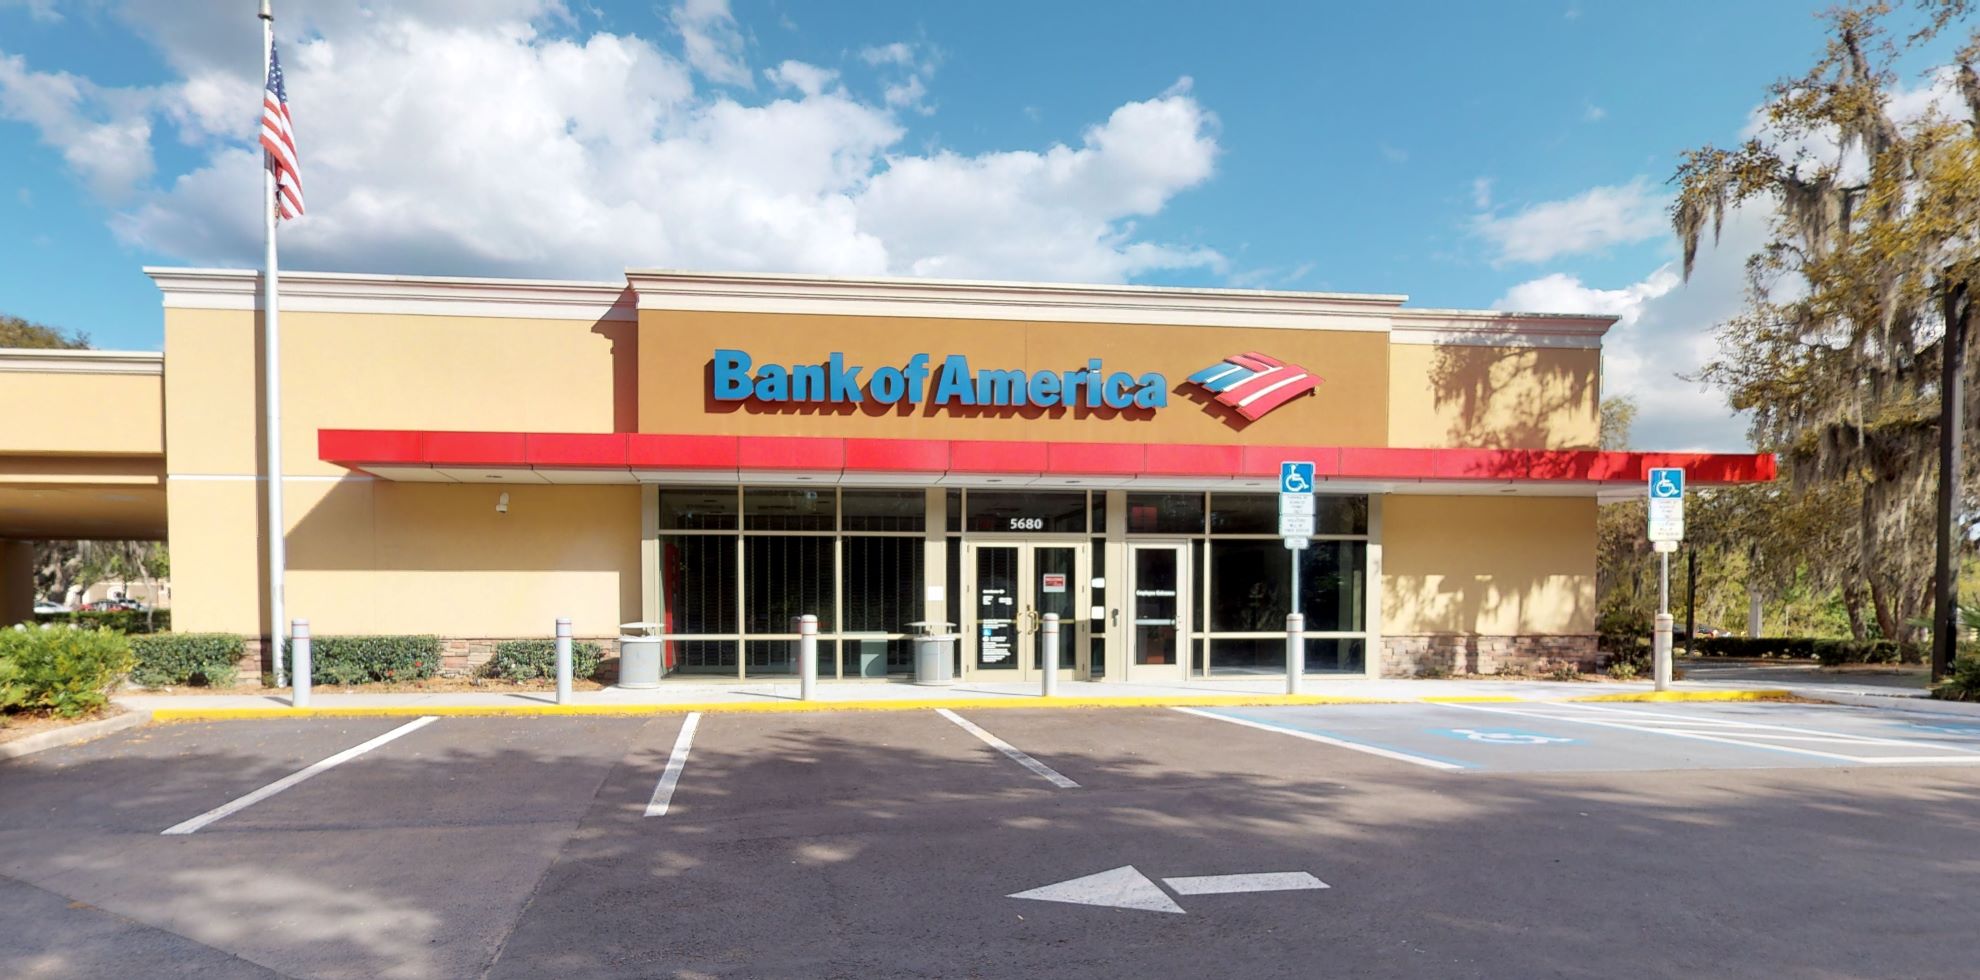 Bank of America financial center with drive-thru ATM | 5680 Fishhawk Crossing Blvd, Lithia, FL 33547